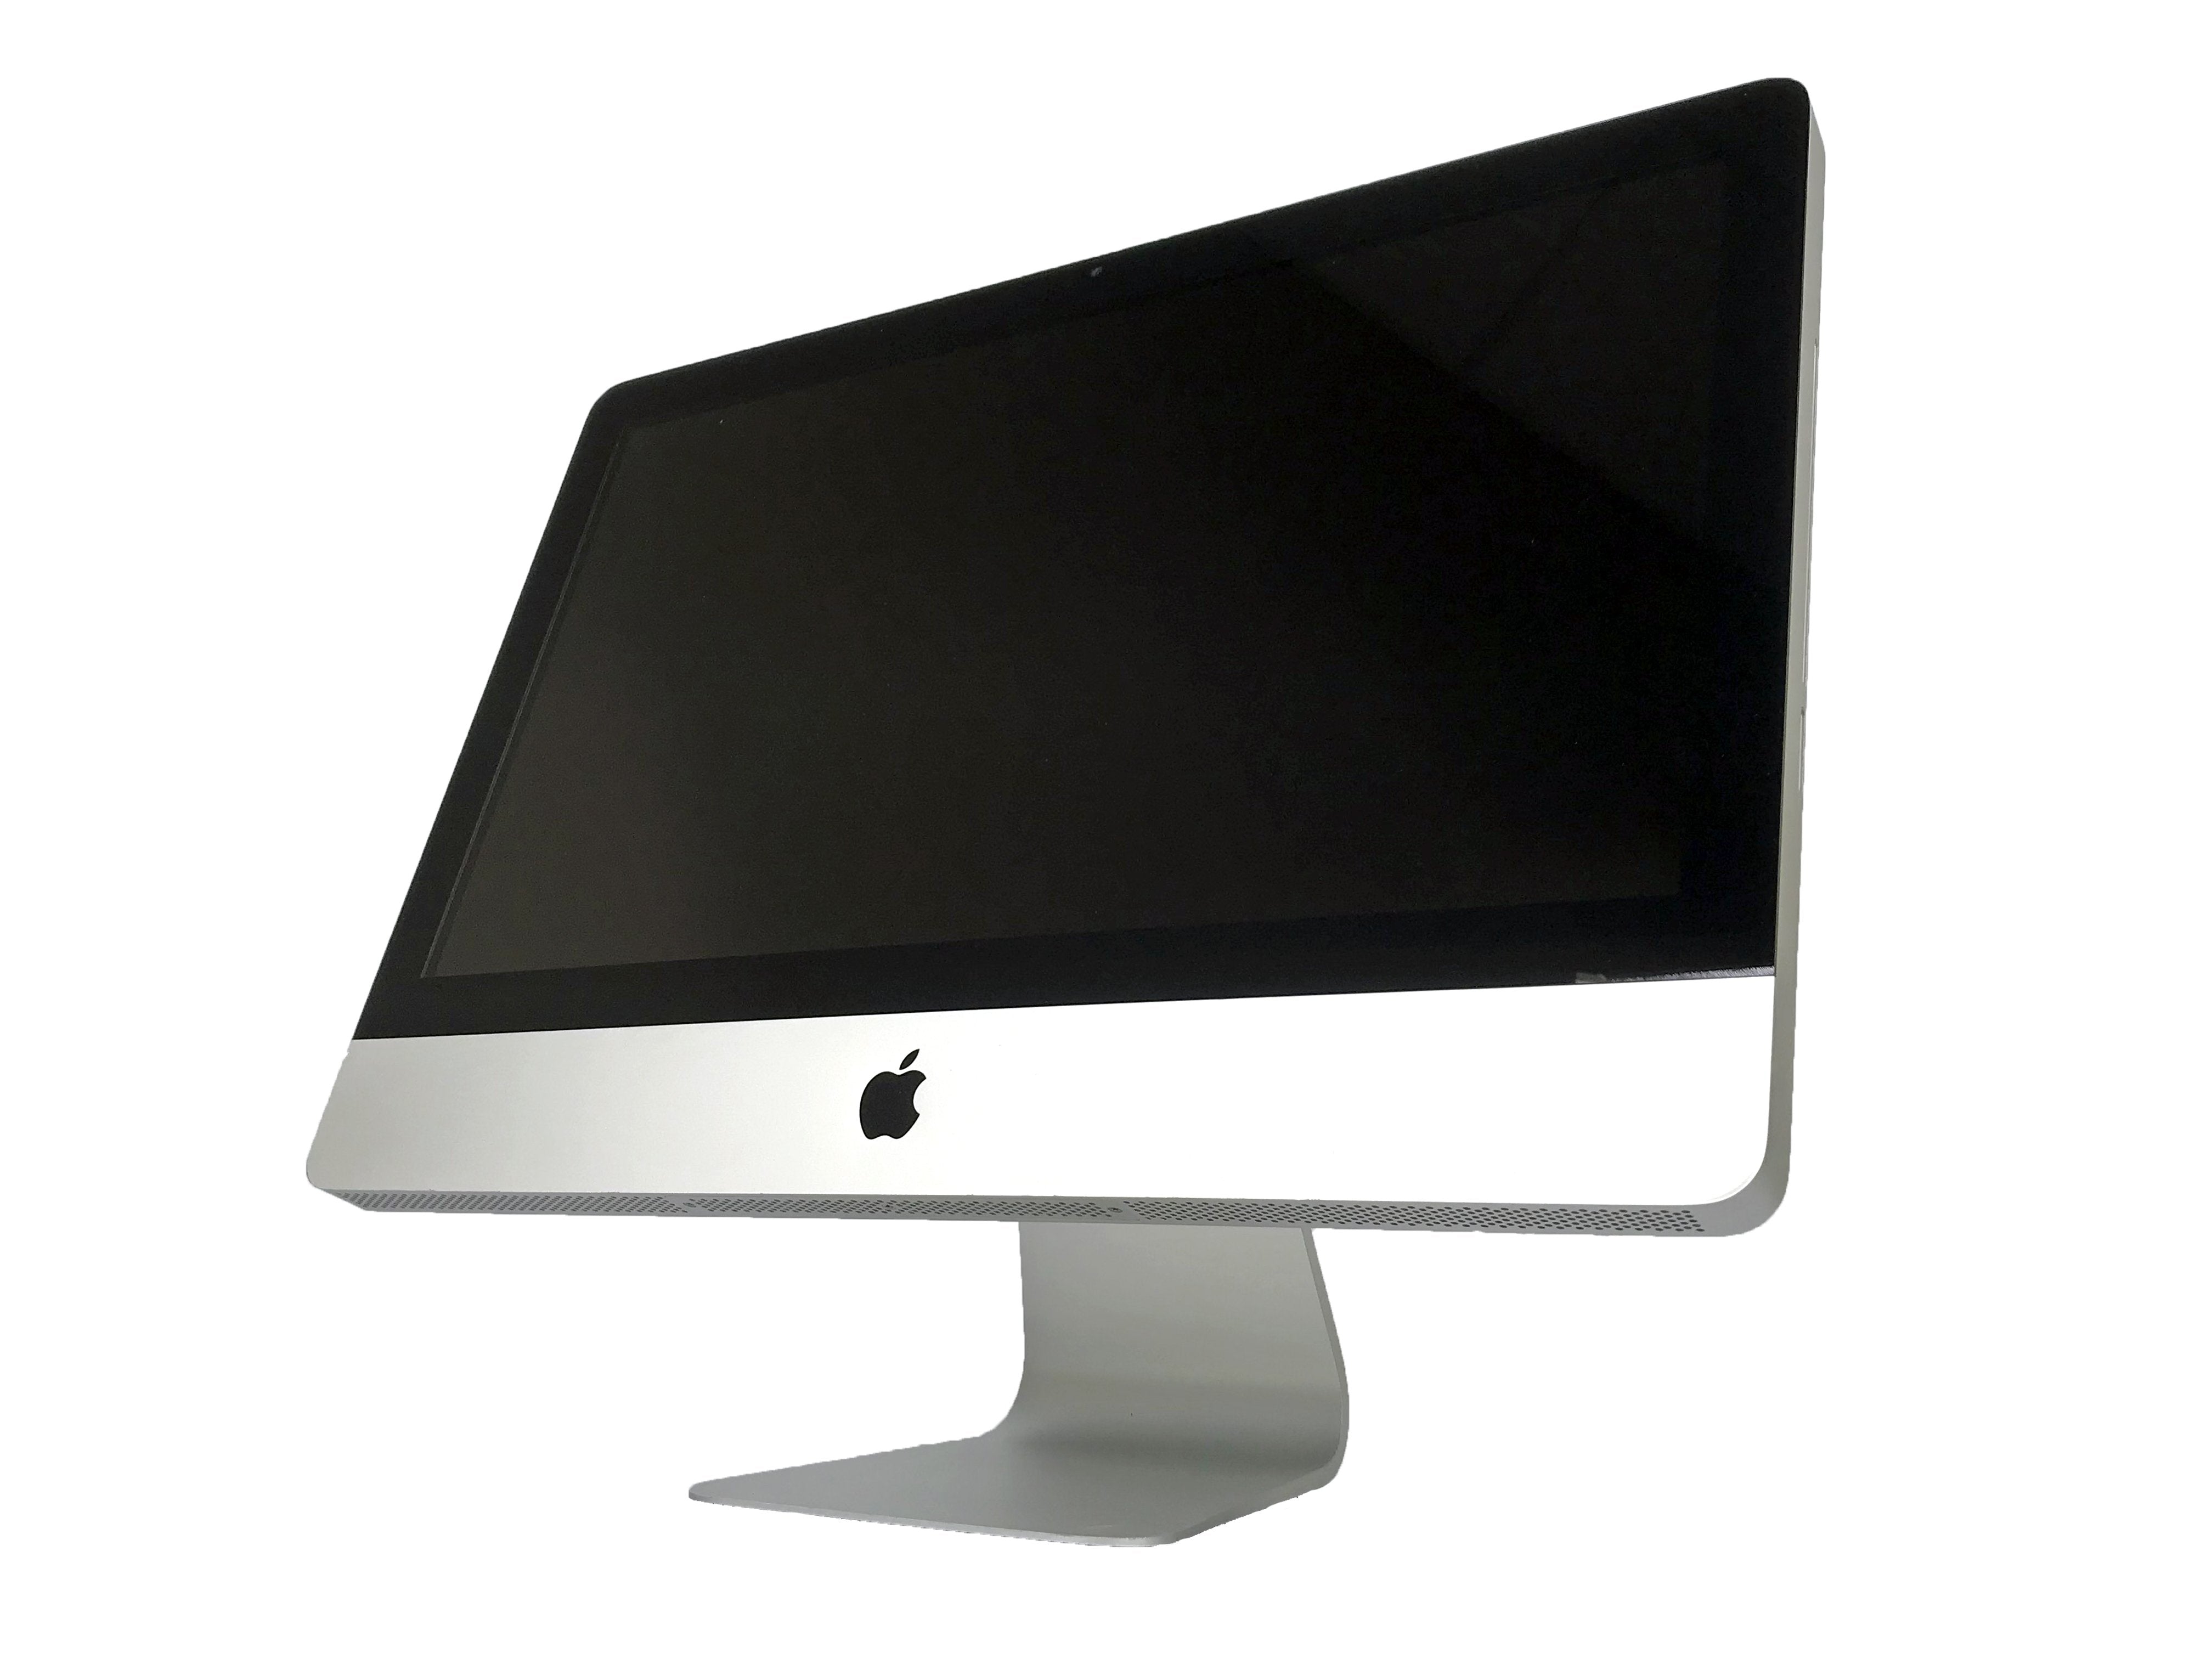 iMac 21.5-inch mid 2011